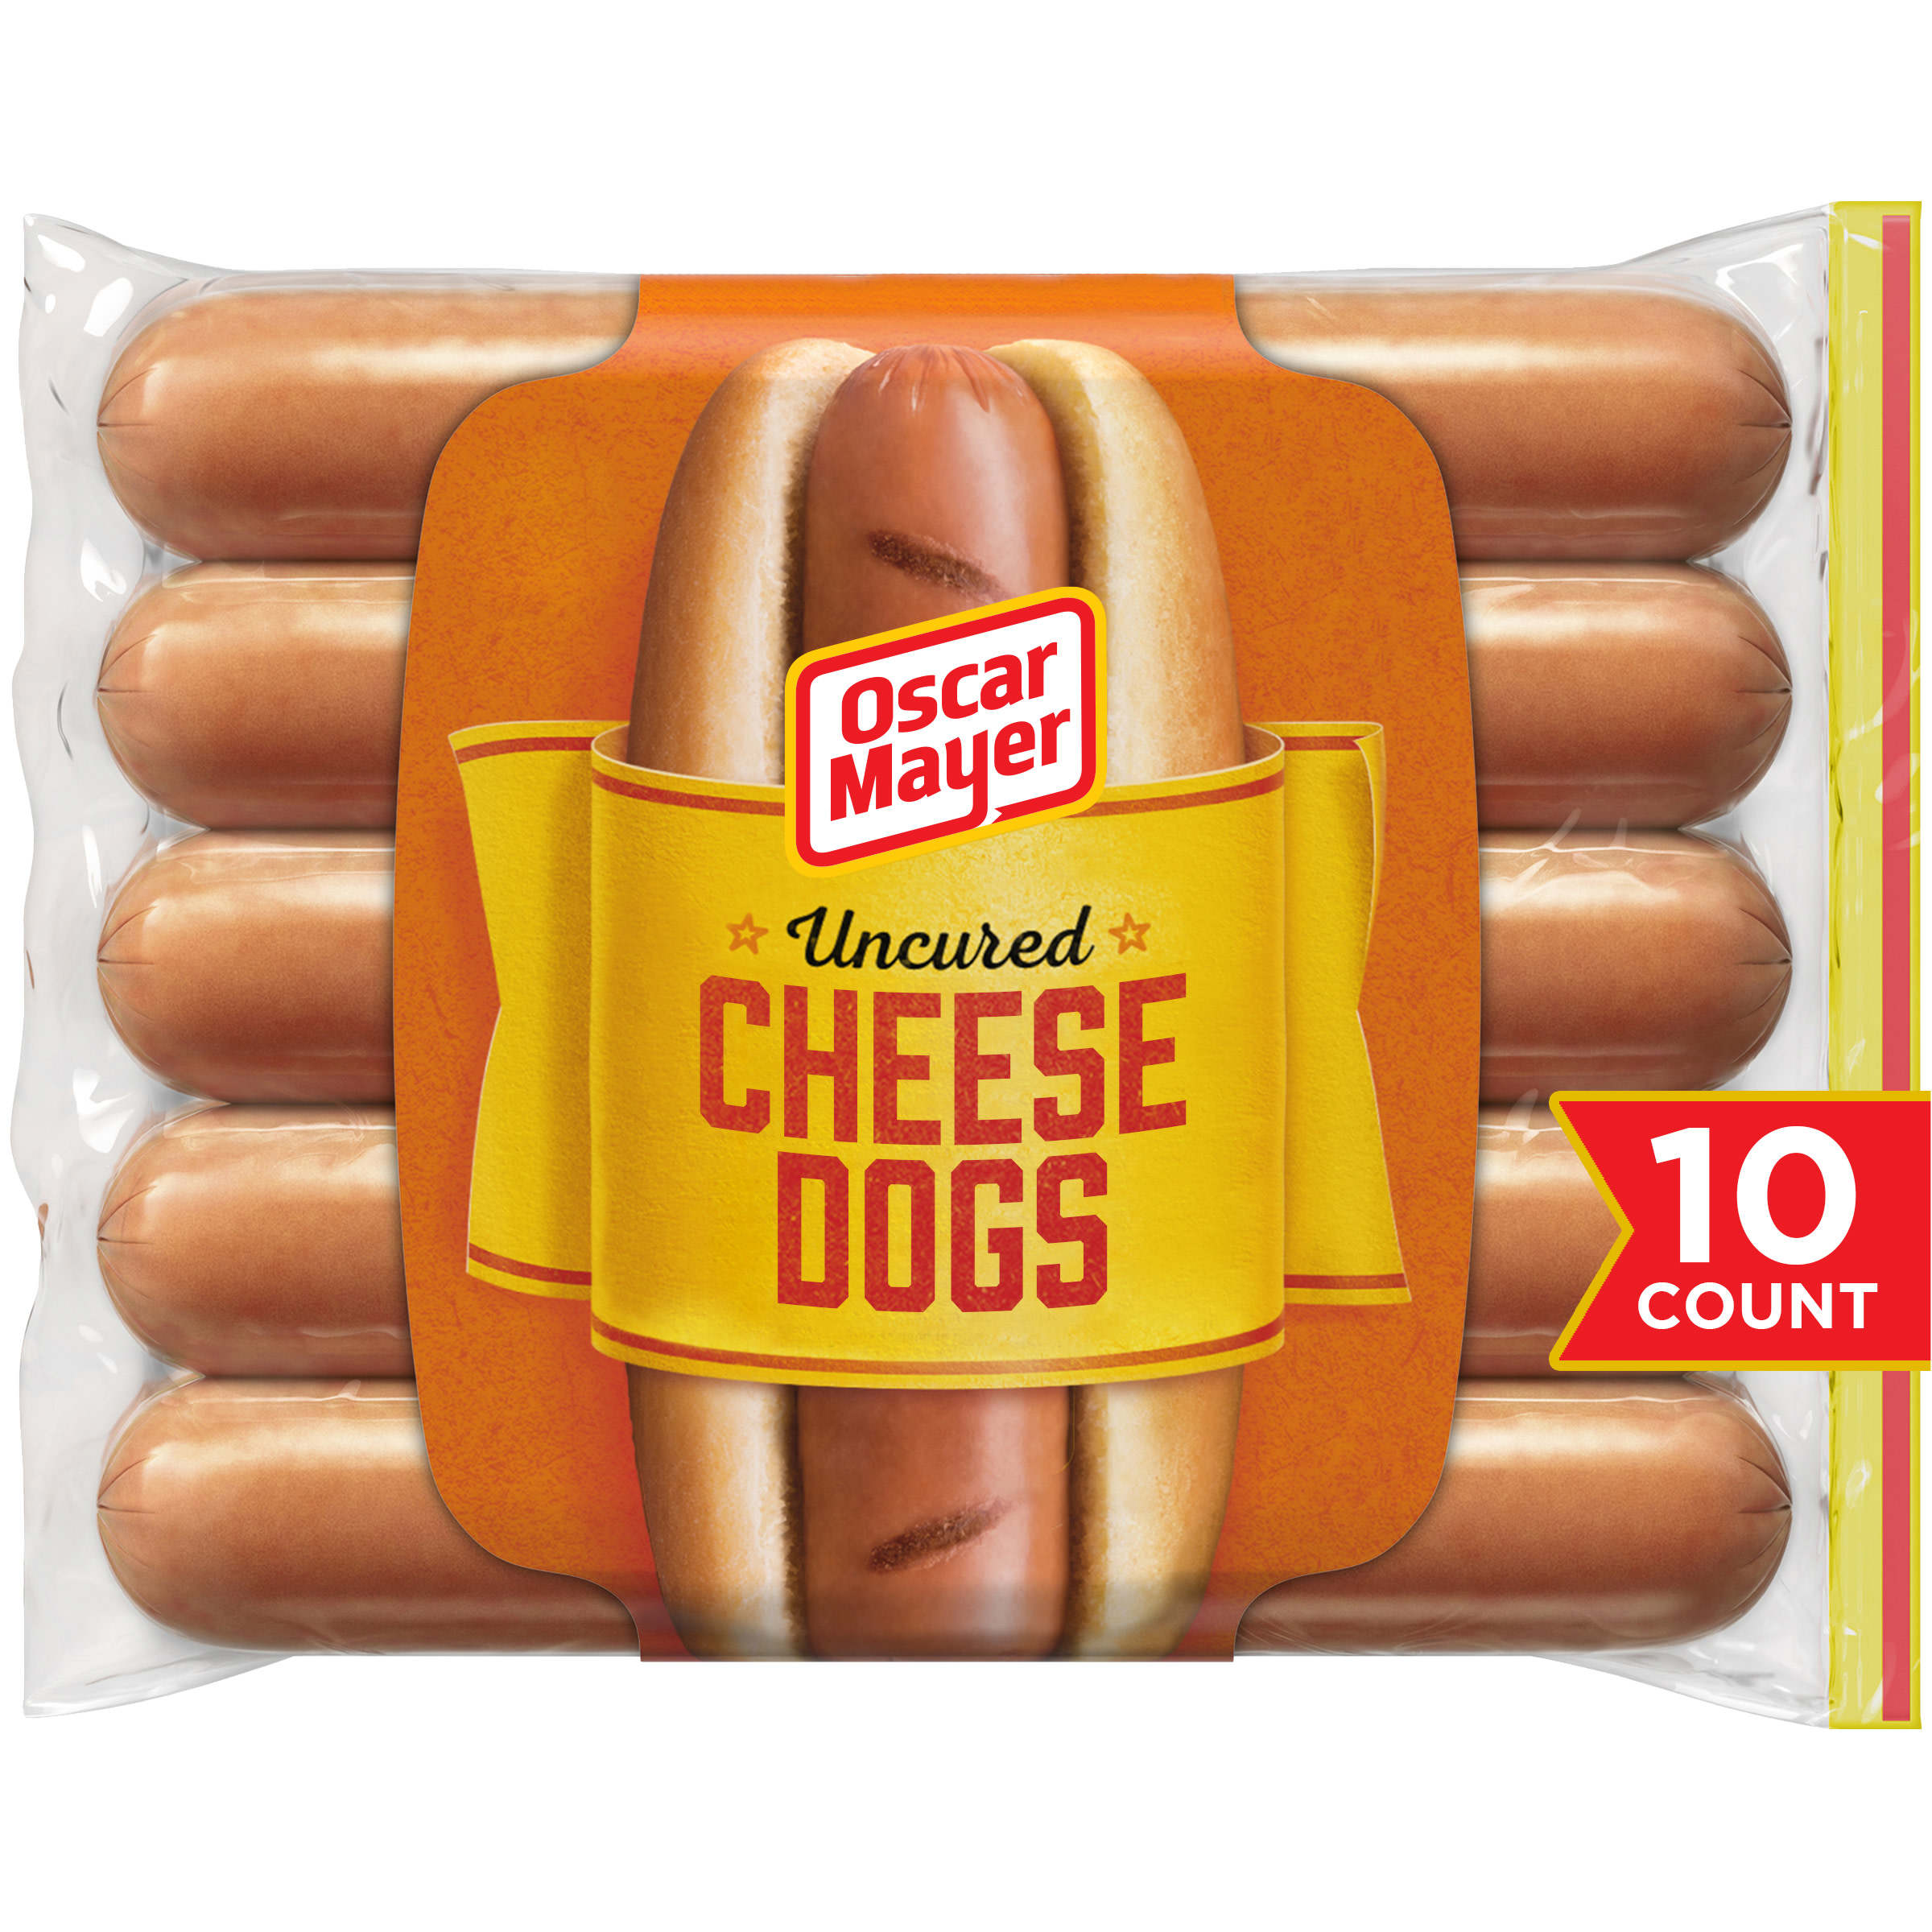 Oscar Mayer Uncured Cheese Hot Dogs, 10 ct Pack - Walmart.com - Walmart.com